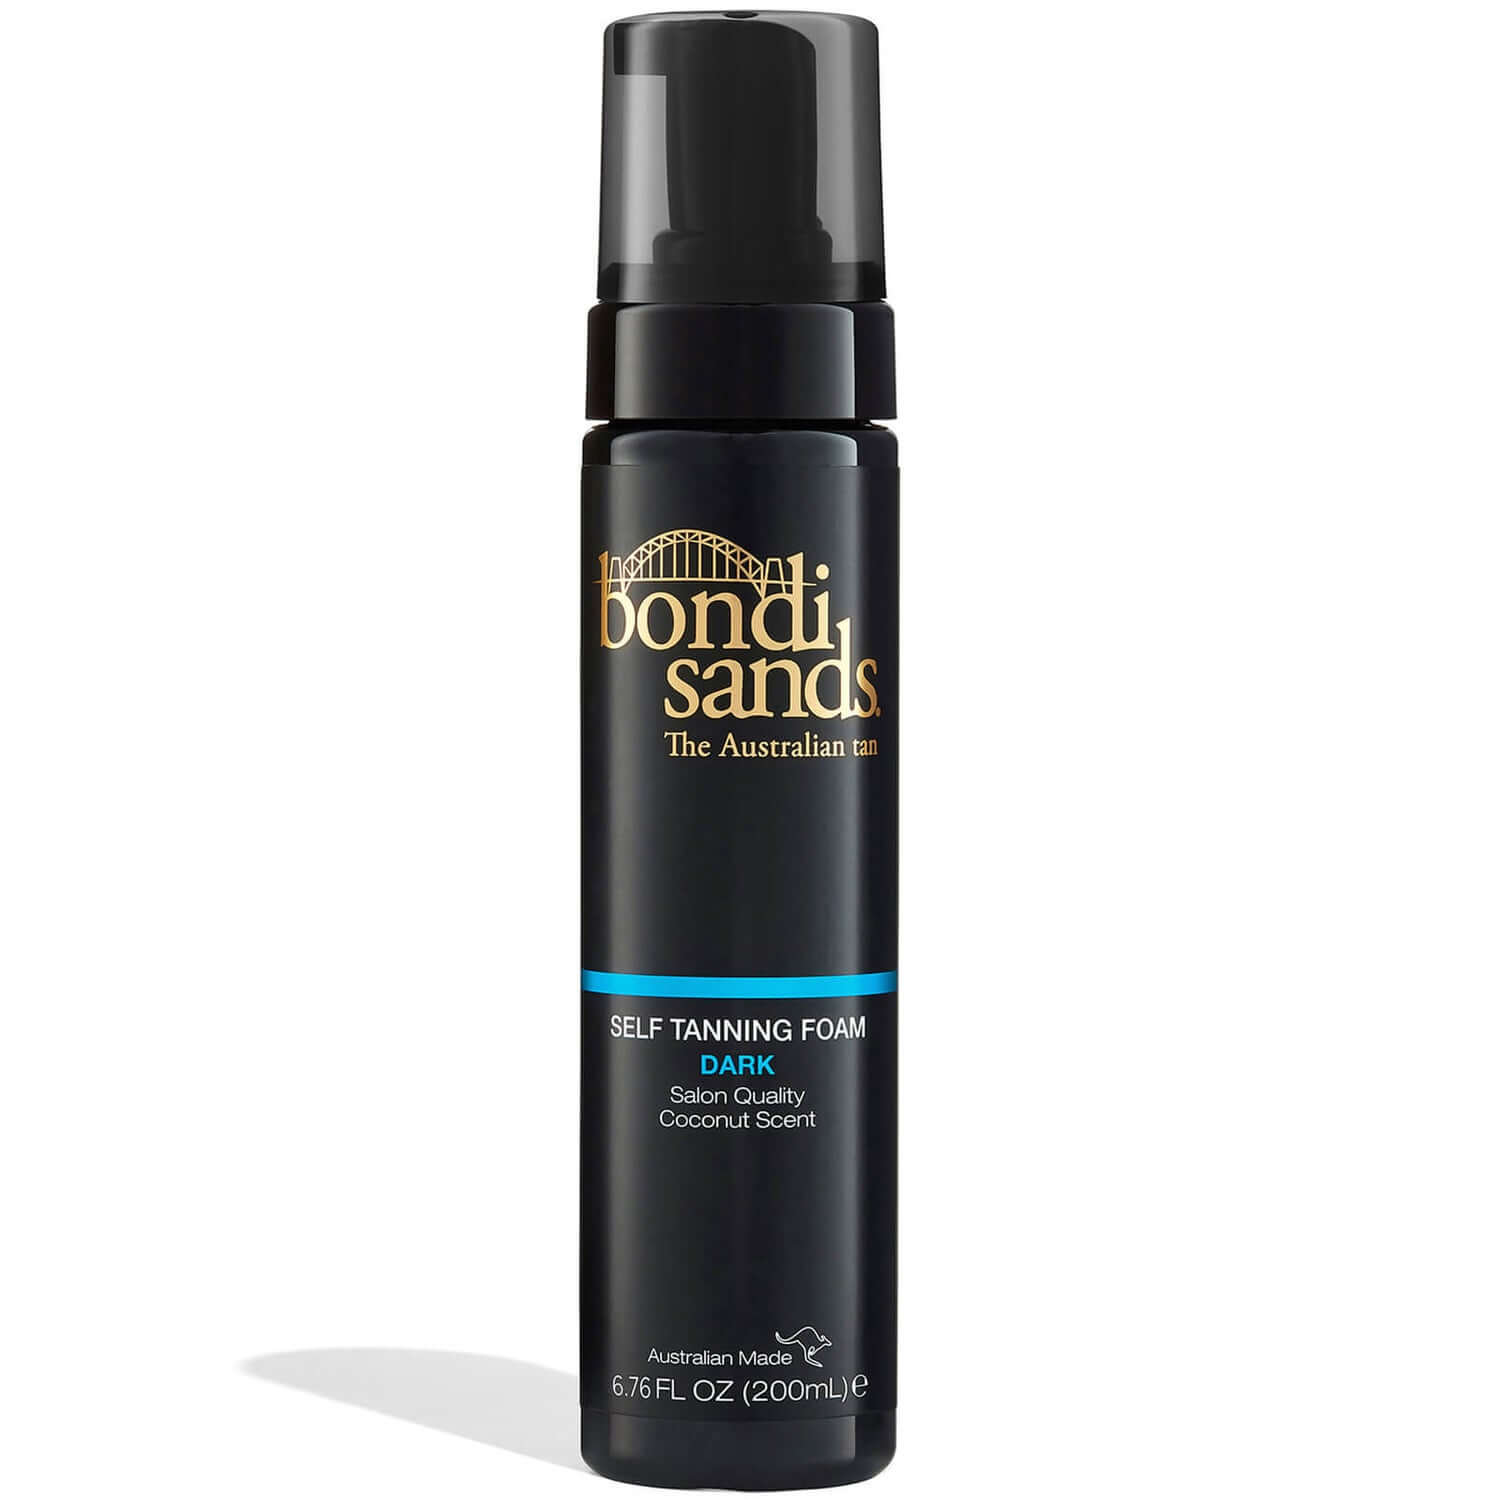 Bondi Sands Self Tanning Foam 200ml - Dark Discounts and Cashback